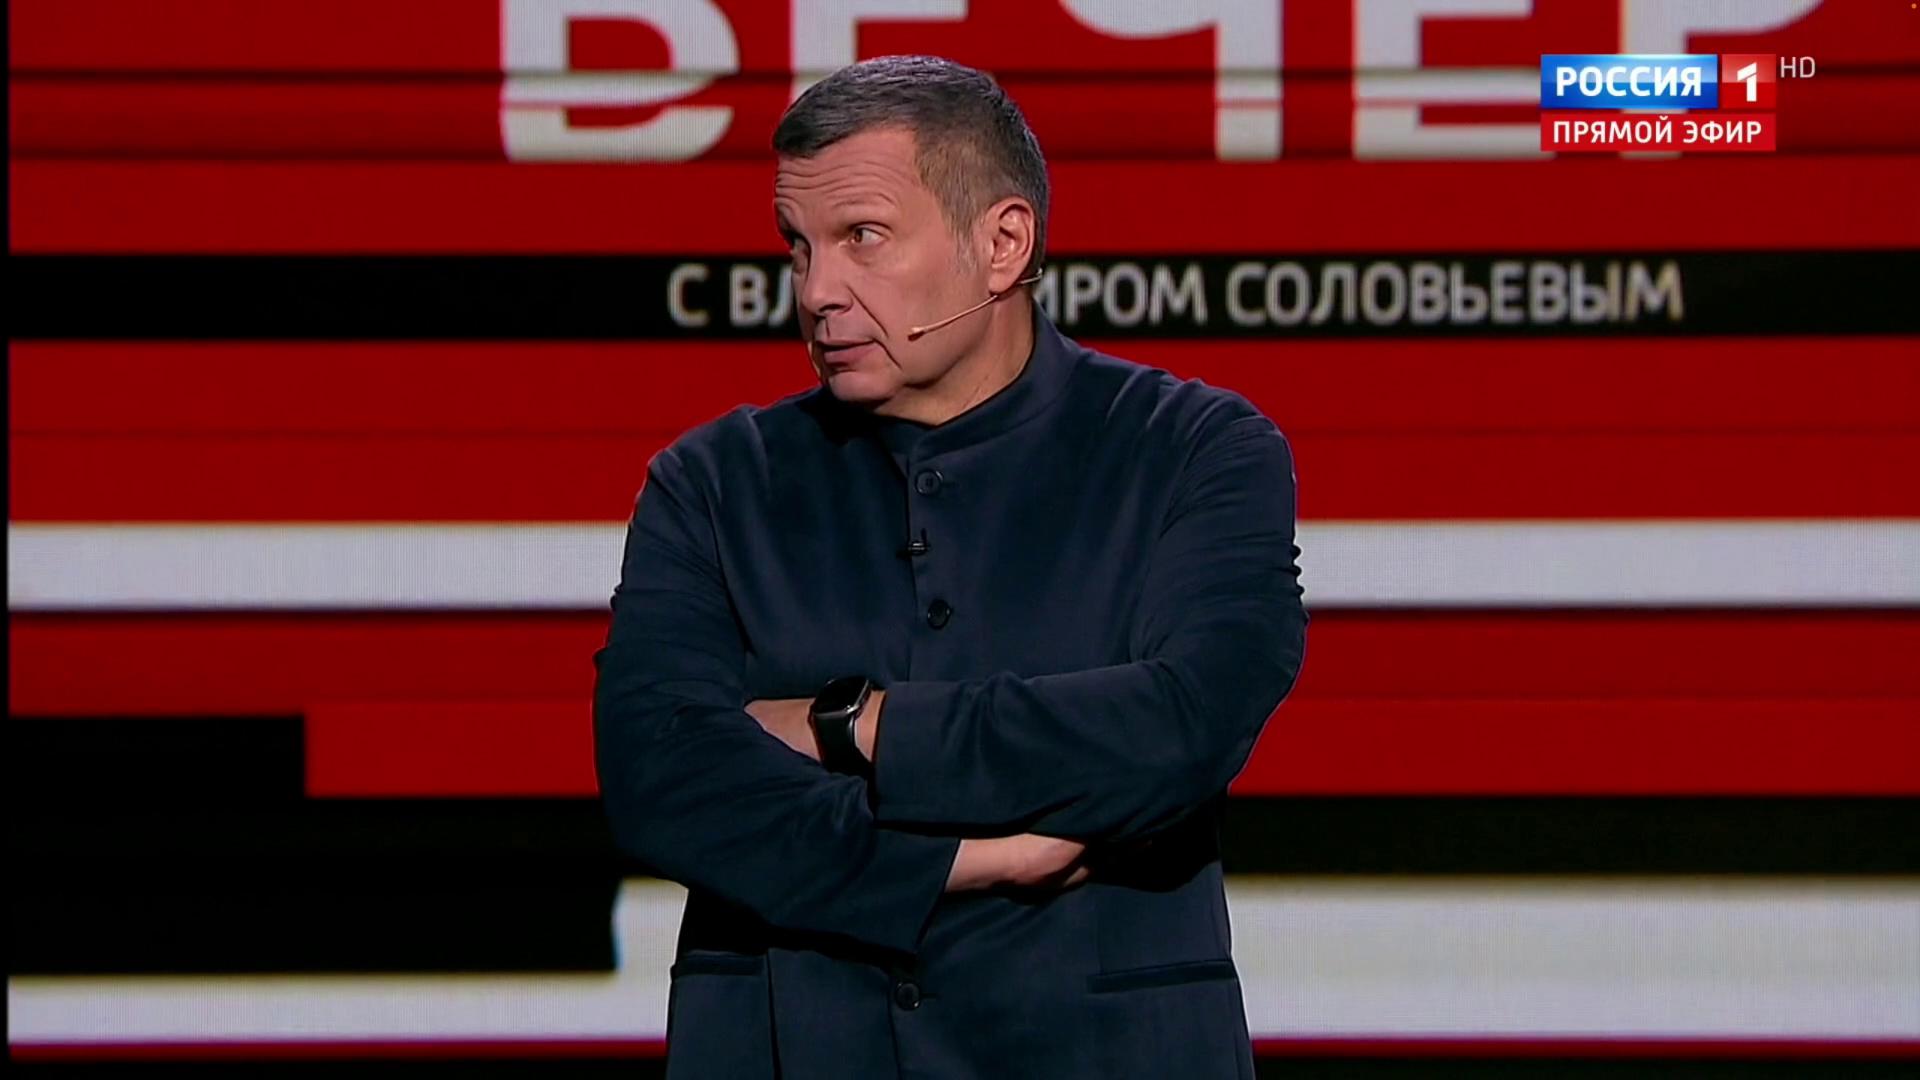 Vladimir Solovyov on his TV show